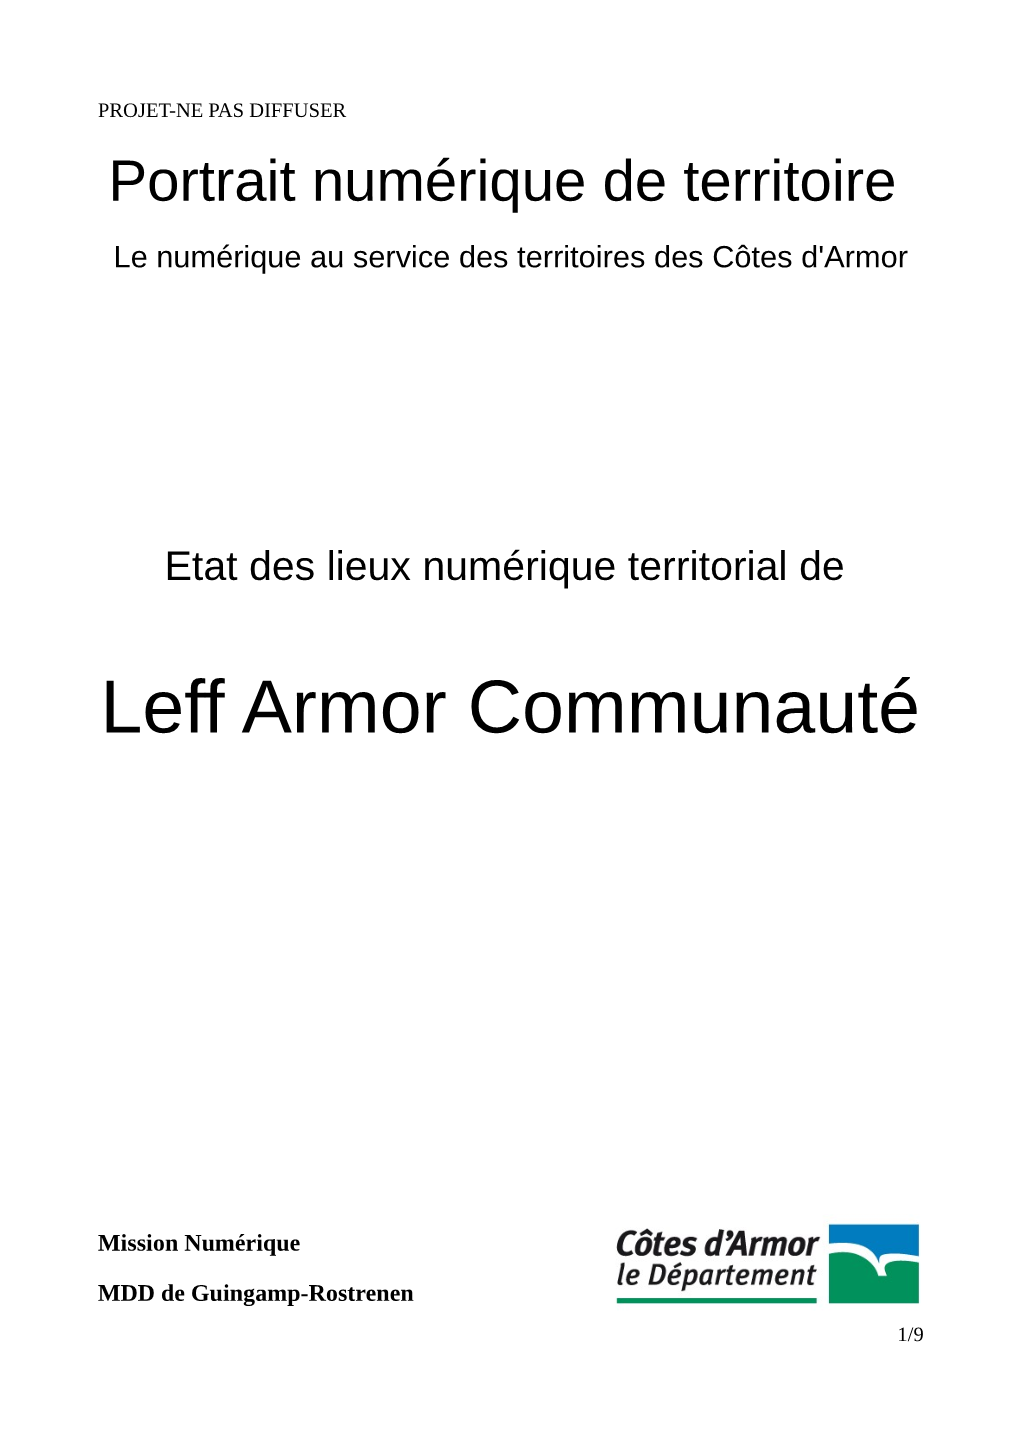 Leff Armor Communauté